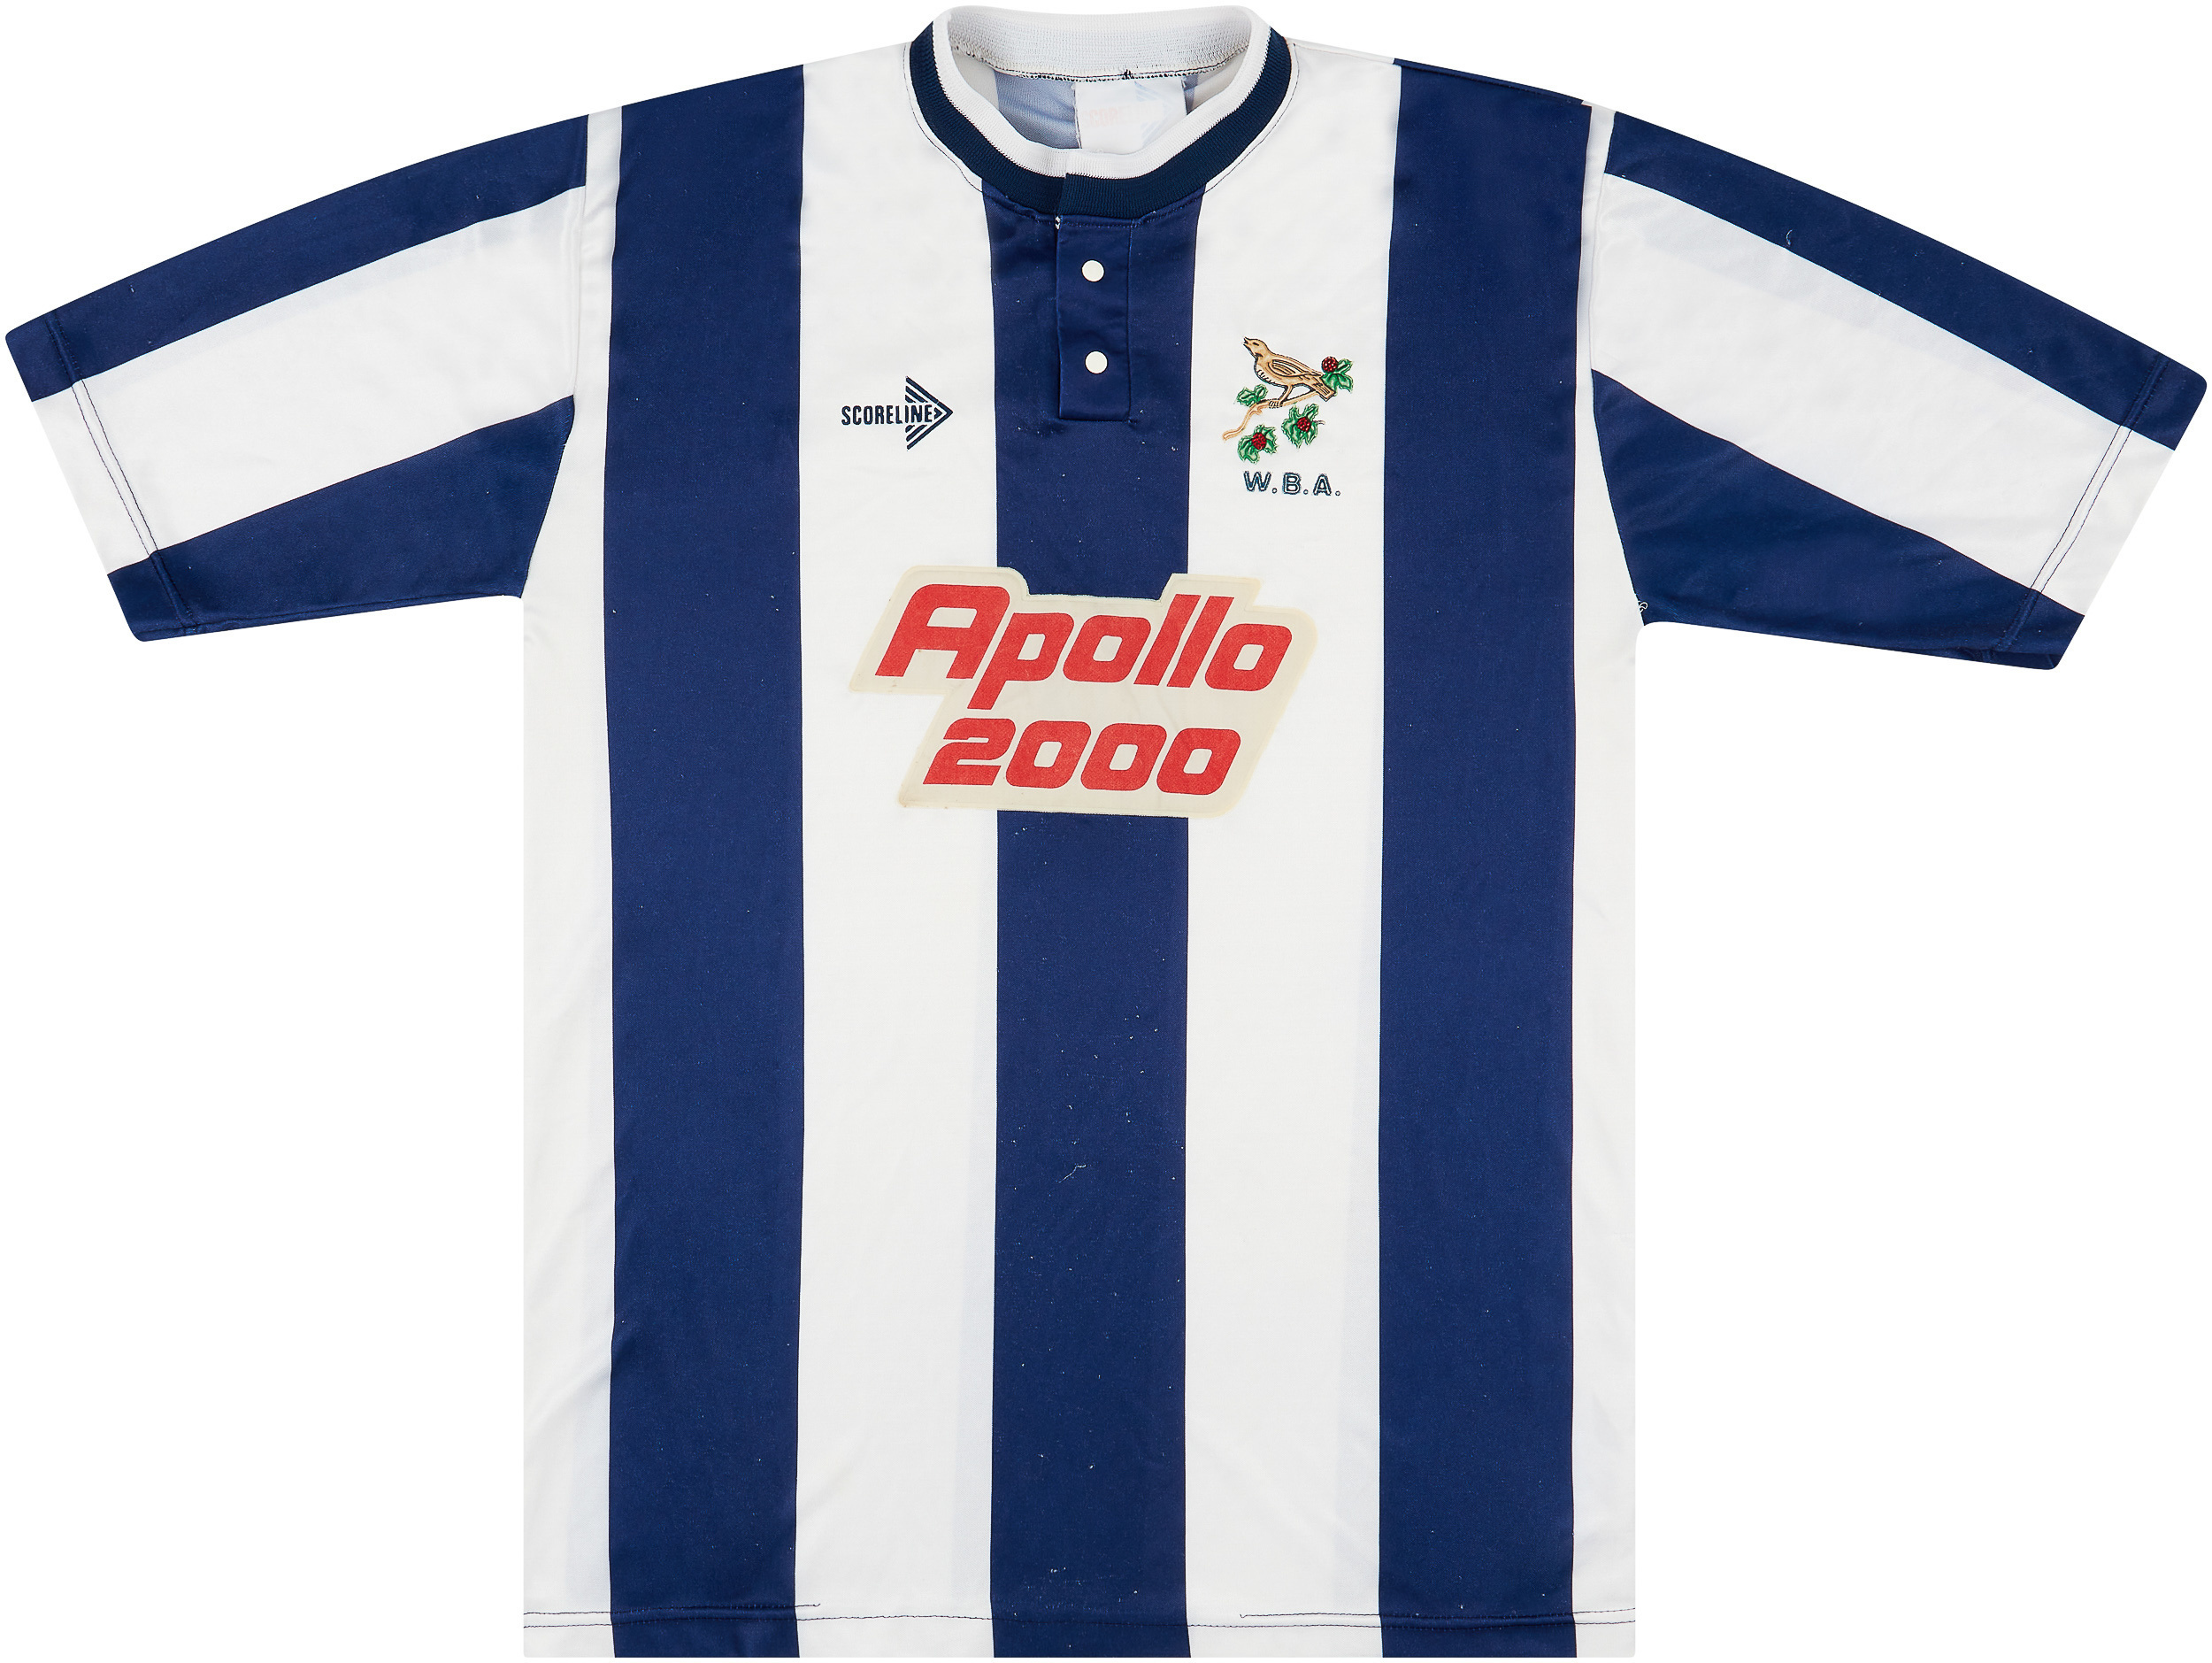 1989-90 West Brom Home Shirt - 8/10 - ()